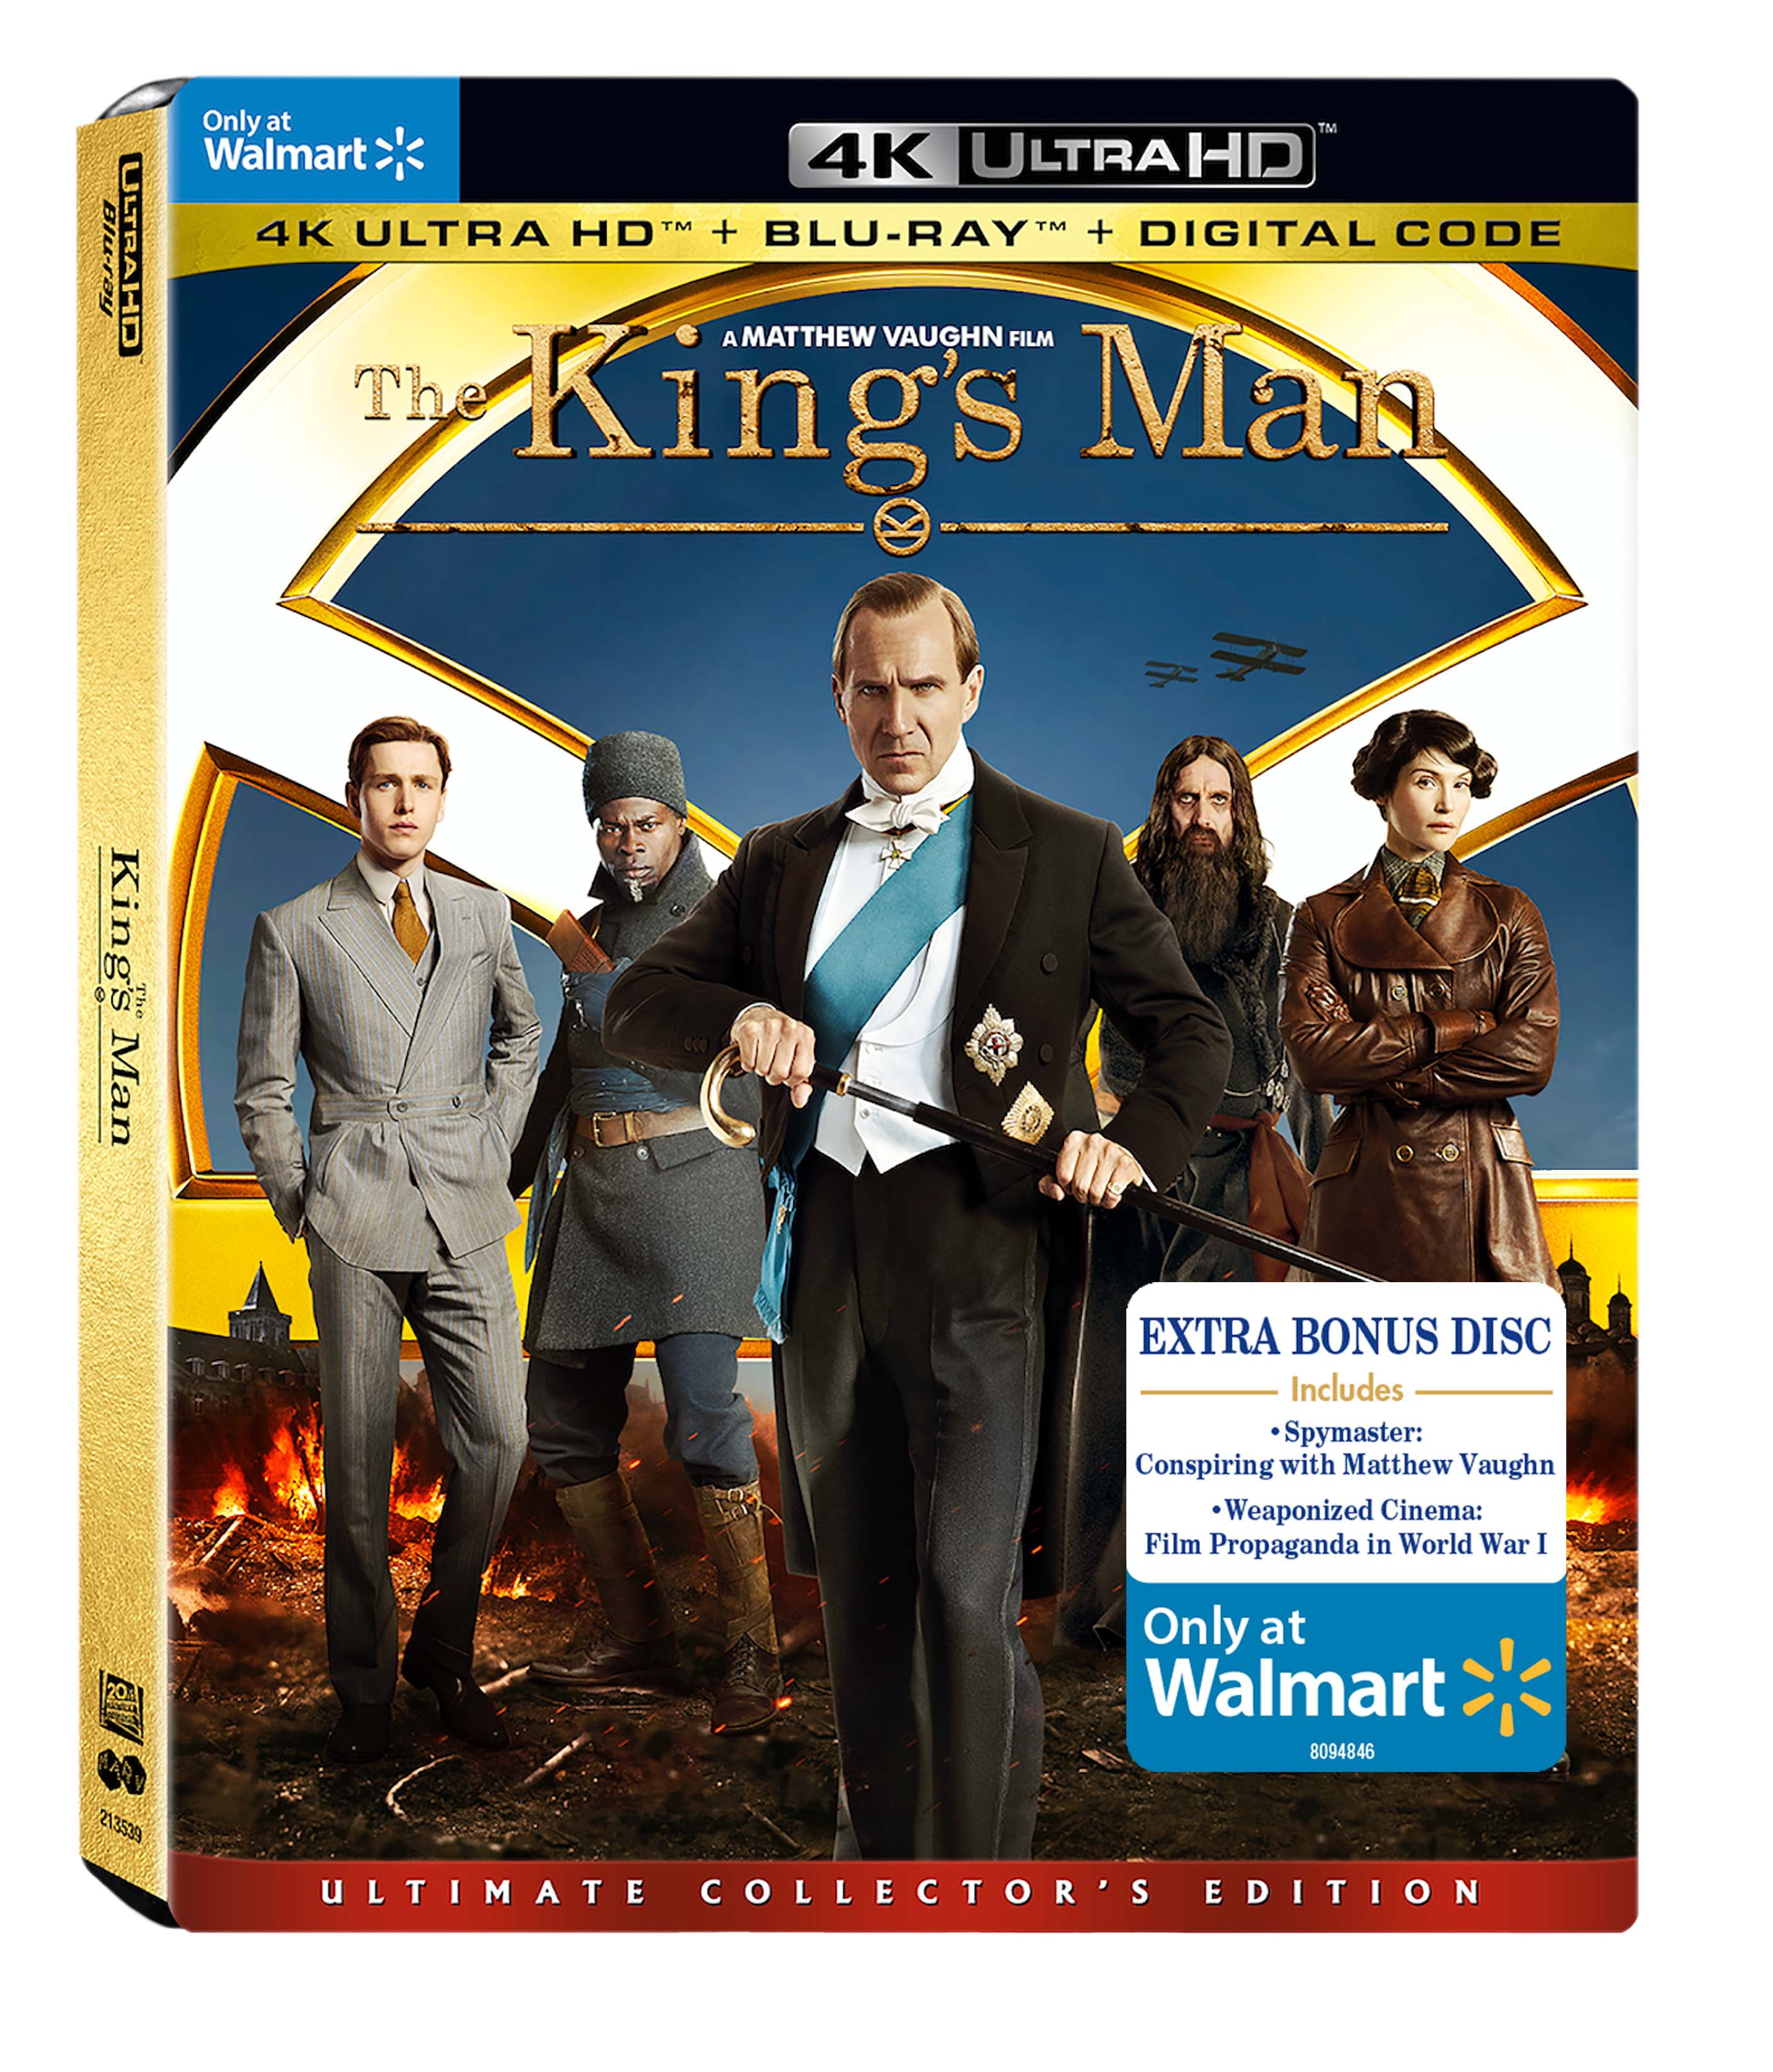  Kingsman: The Secret Service [Blu-ray] : Movies & TV